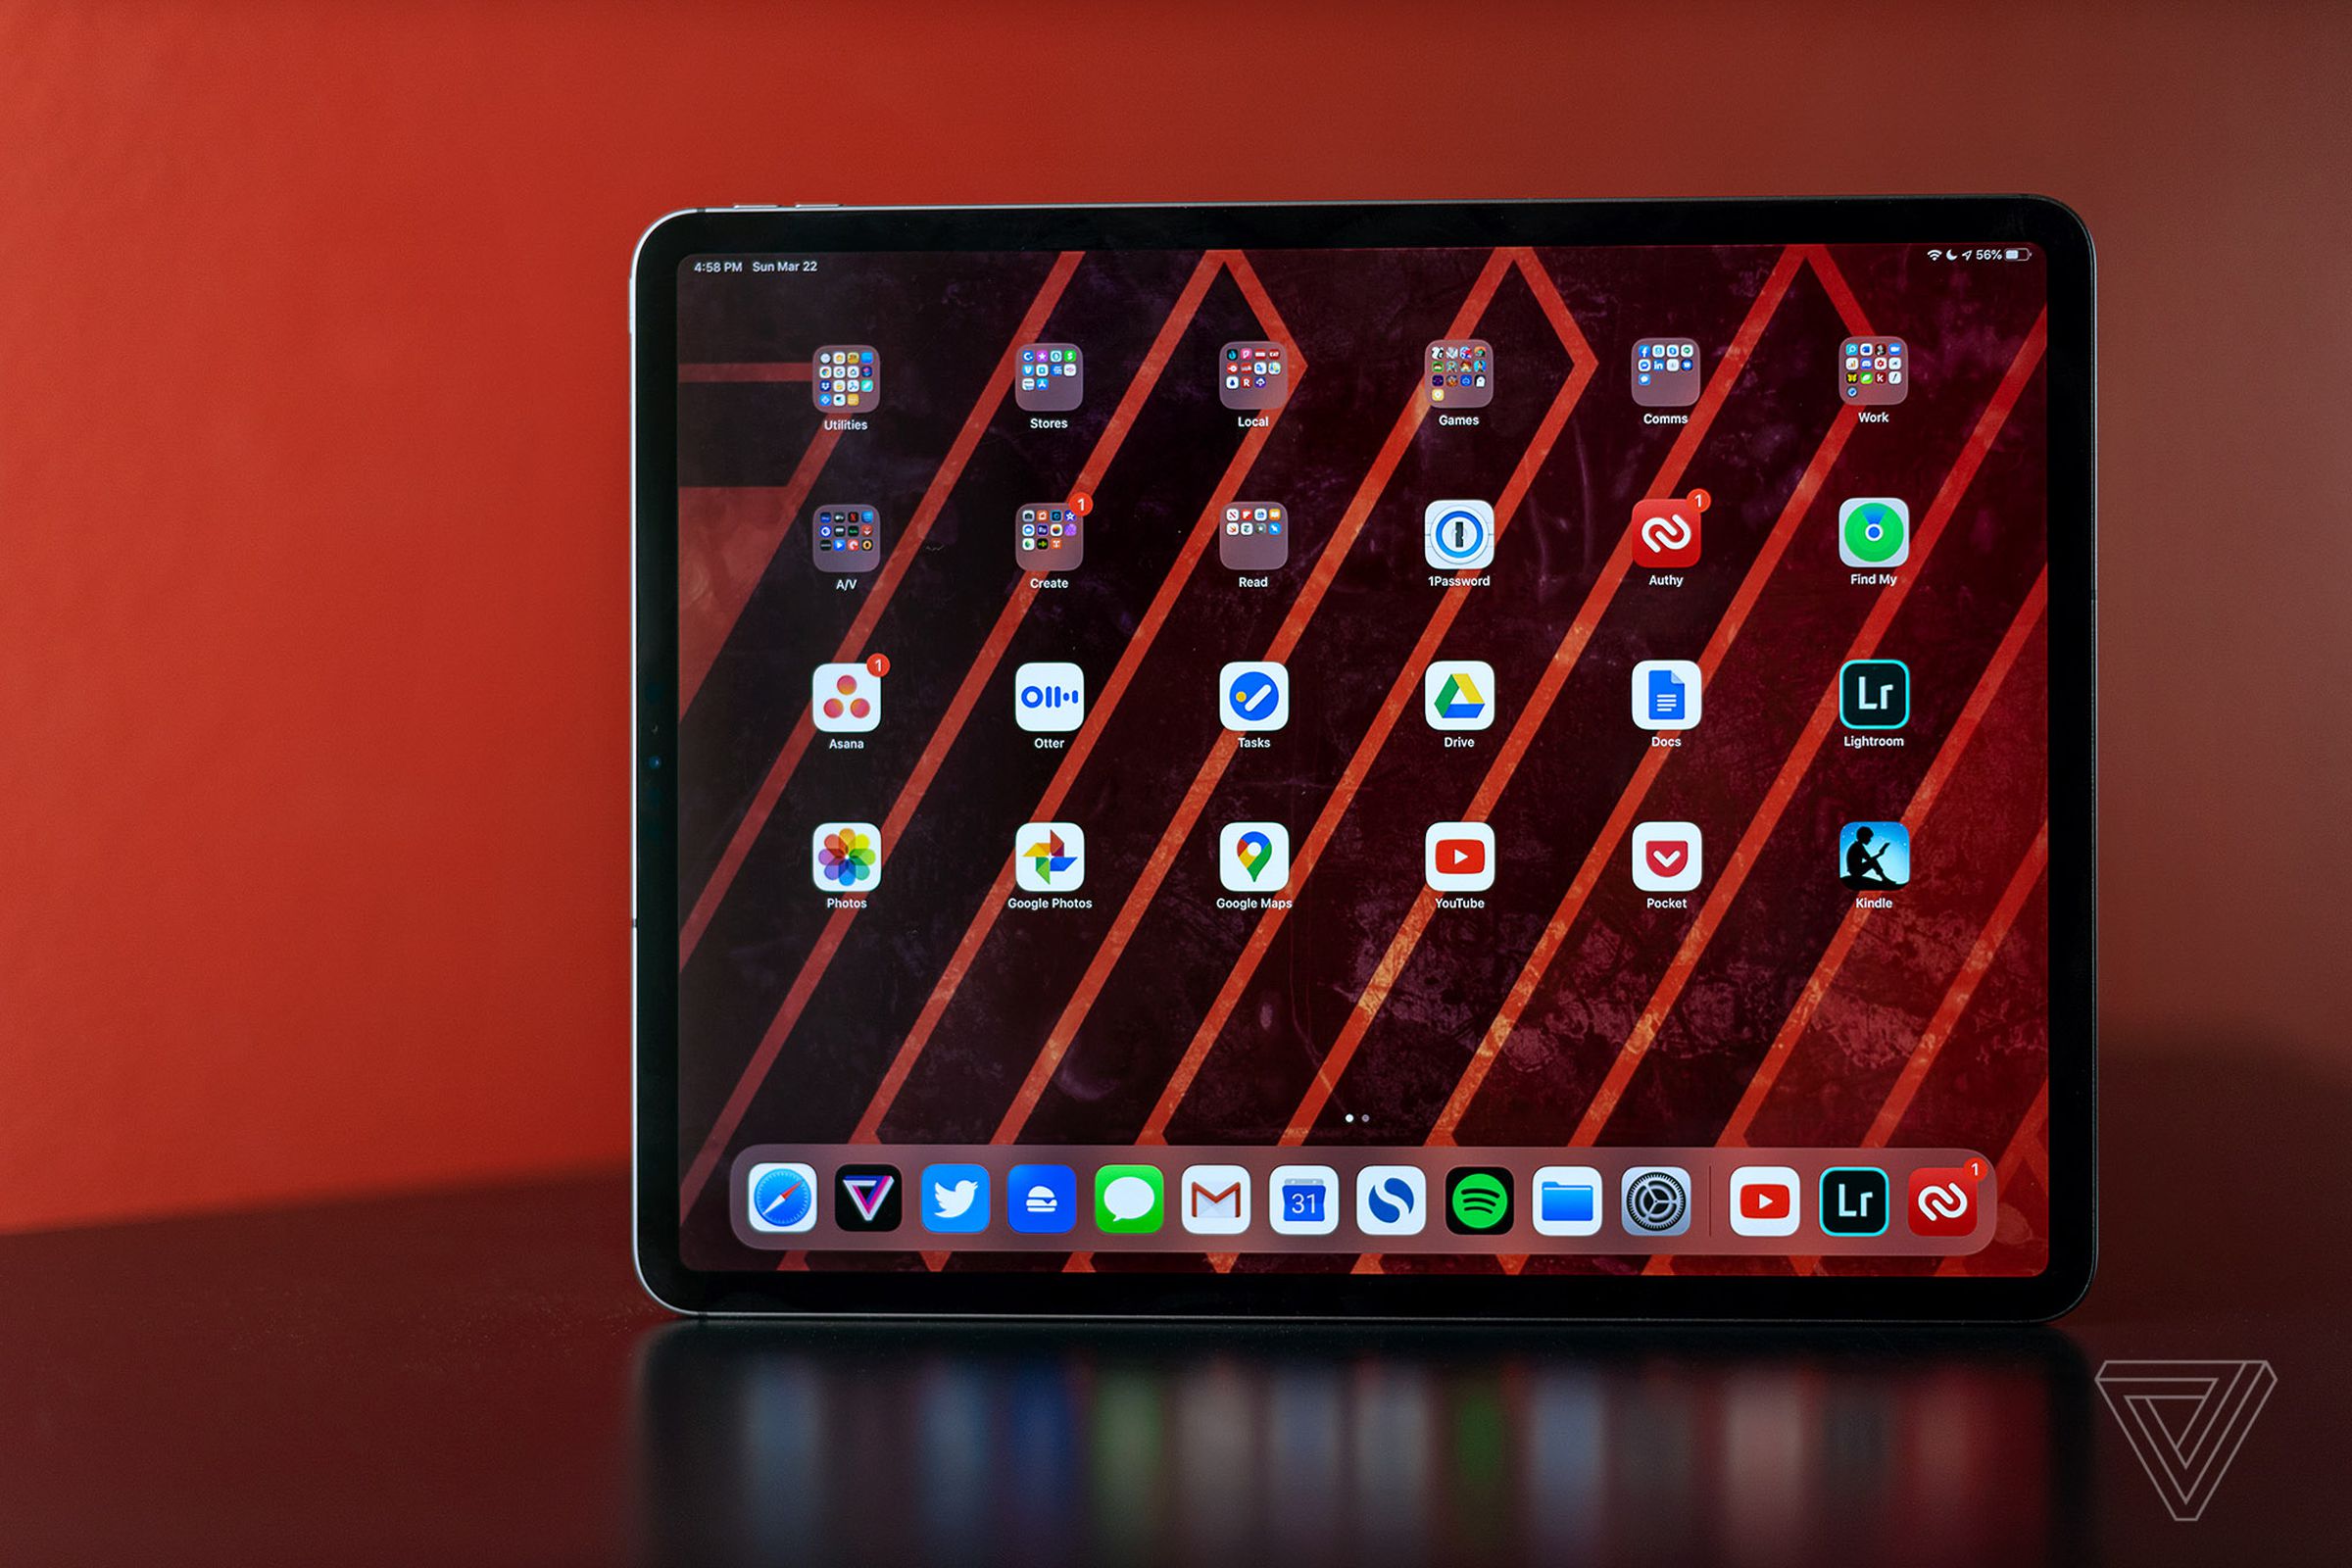 The 2020 iPad Pro 12.9